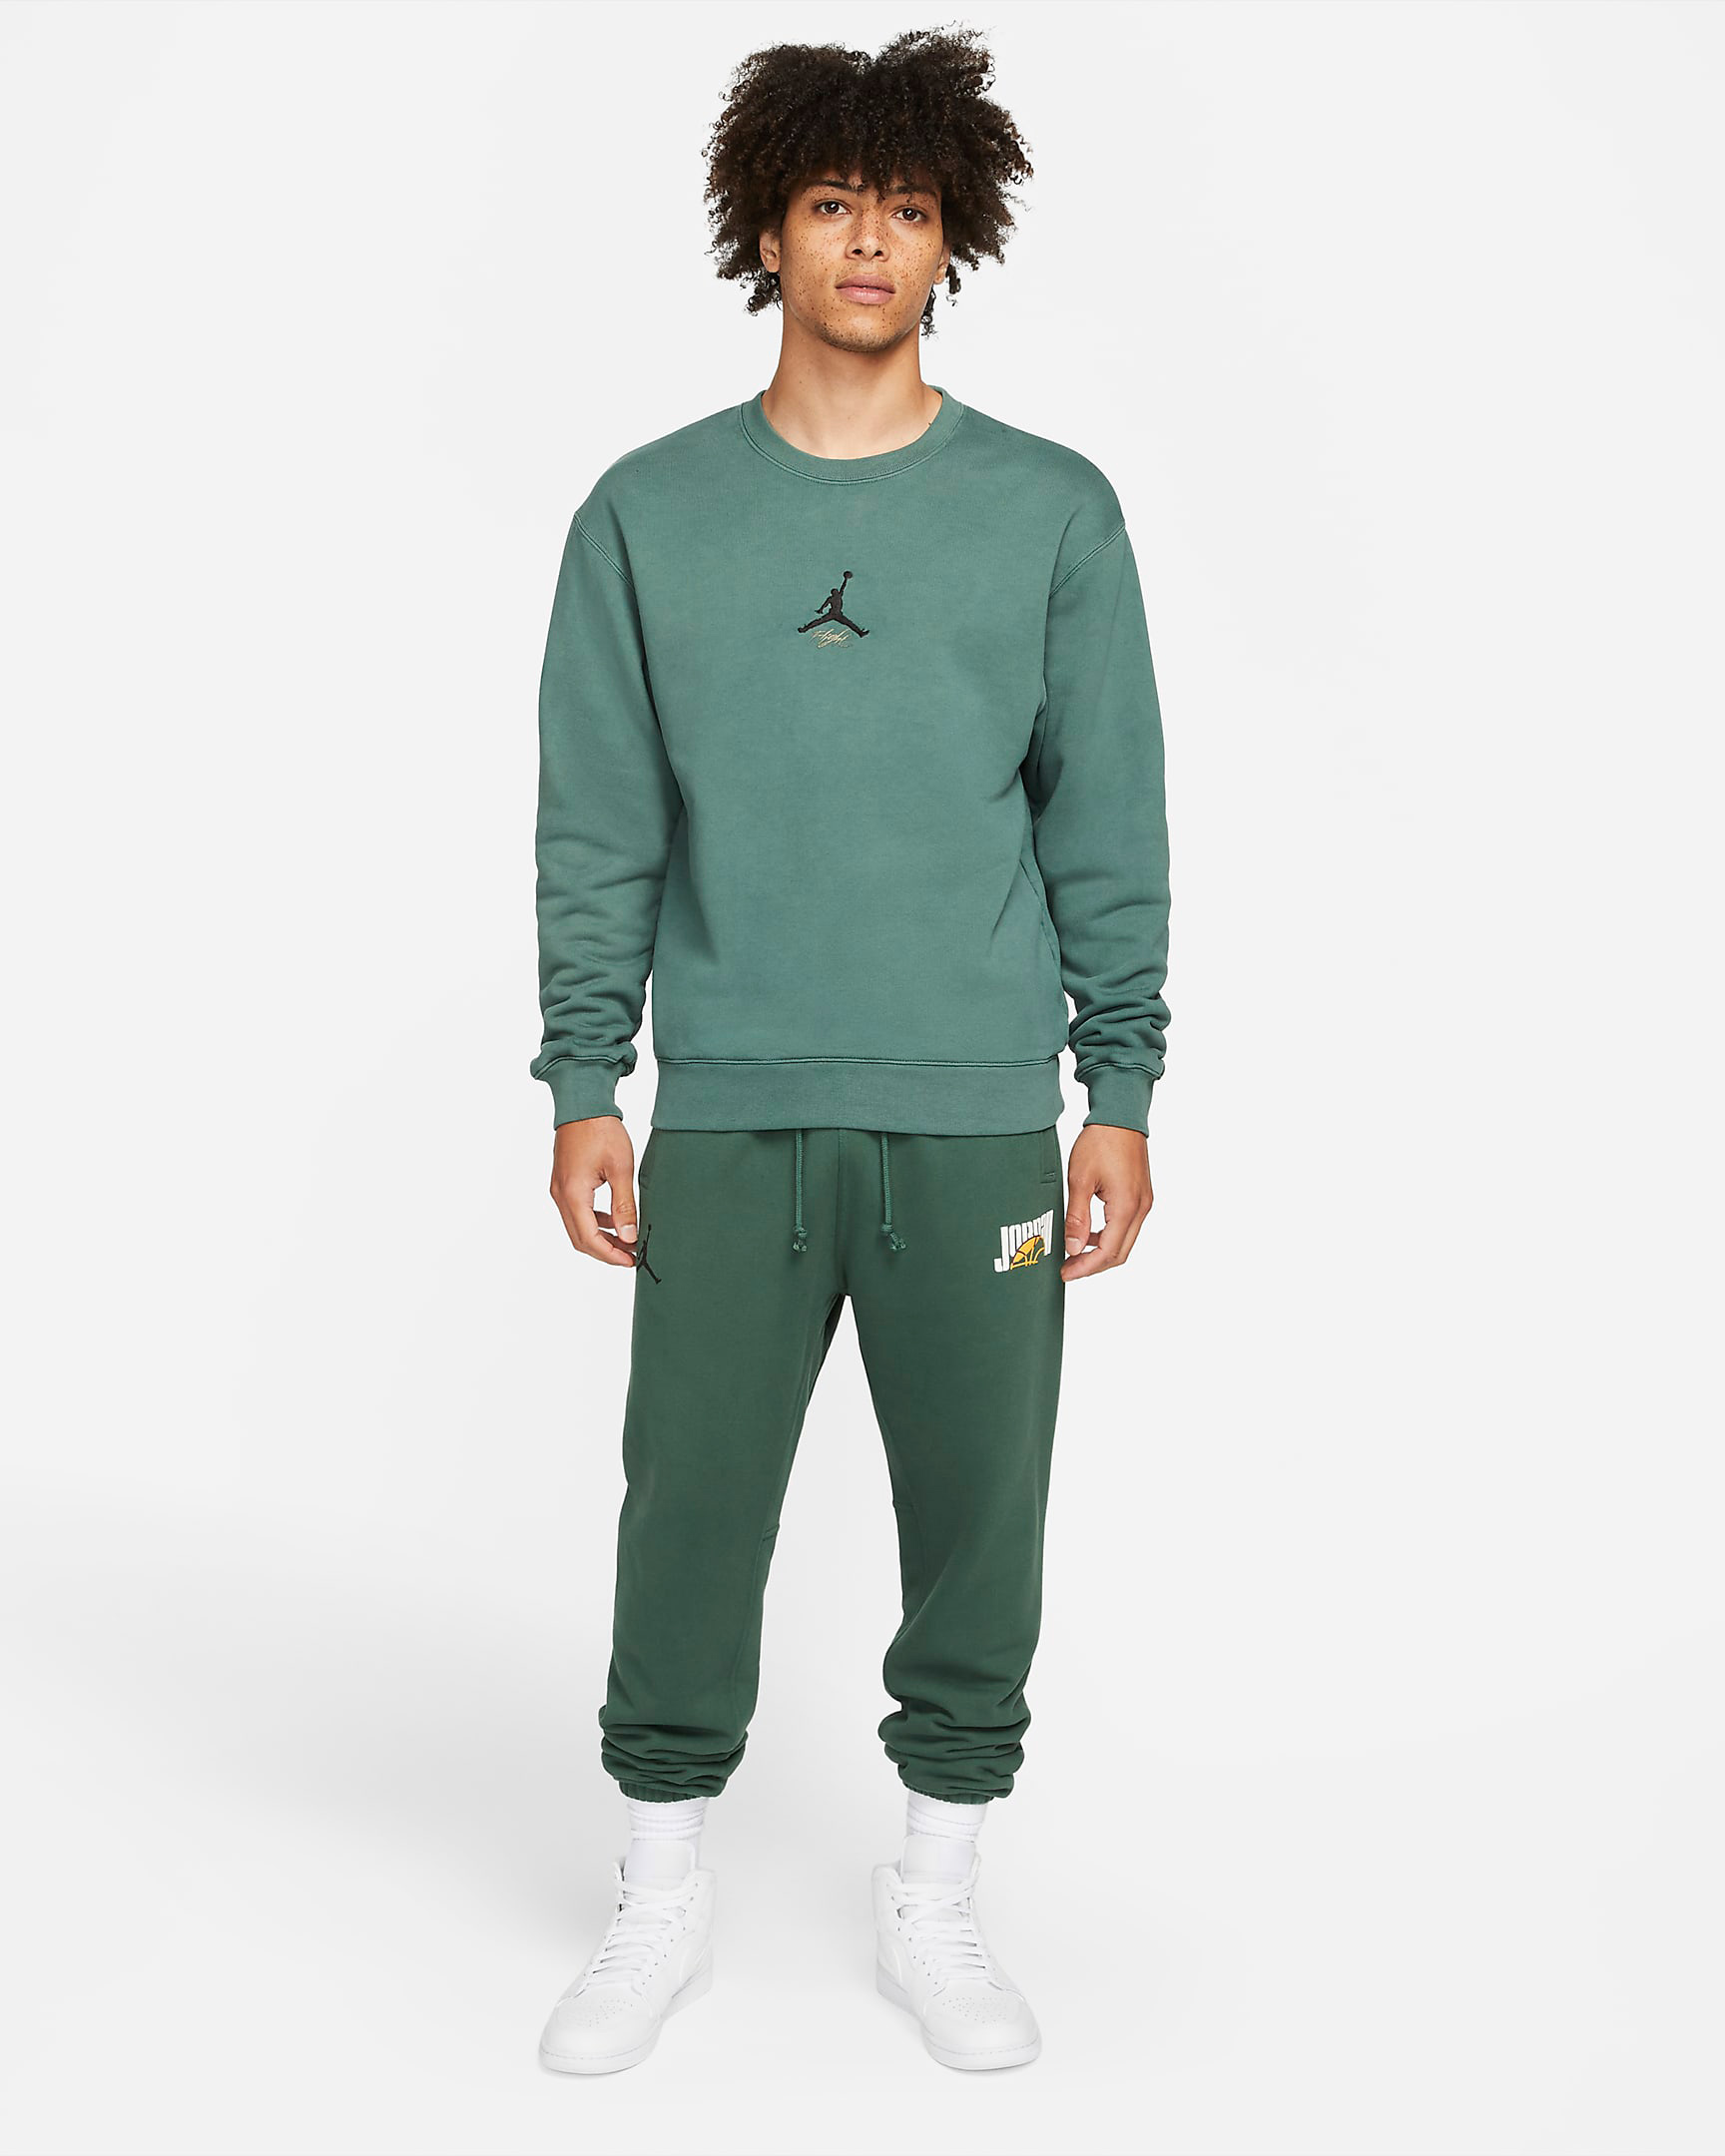 jordan-noble-green-flight-heritage-sweatshirt-pants-outfit